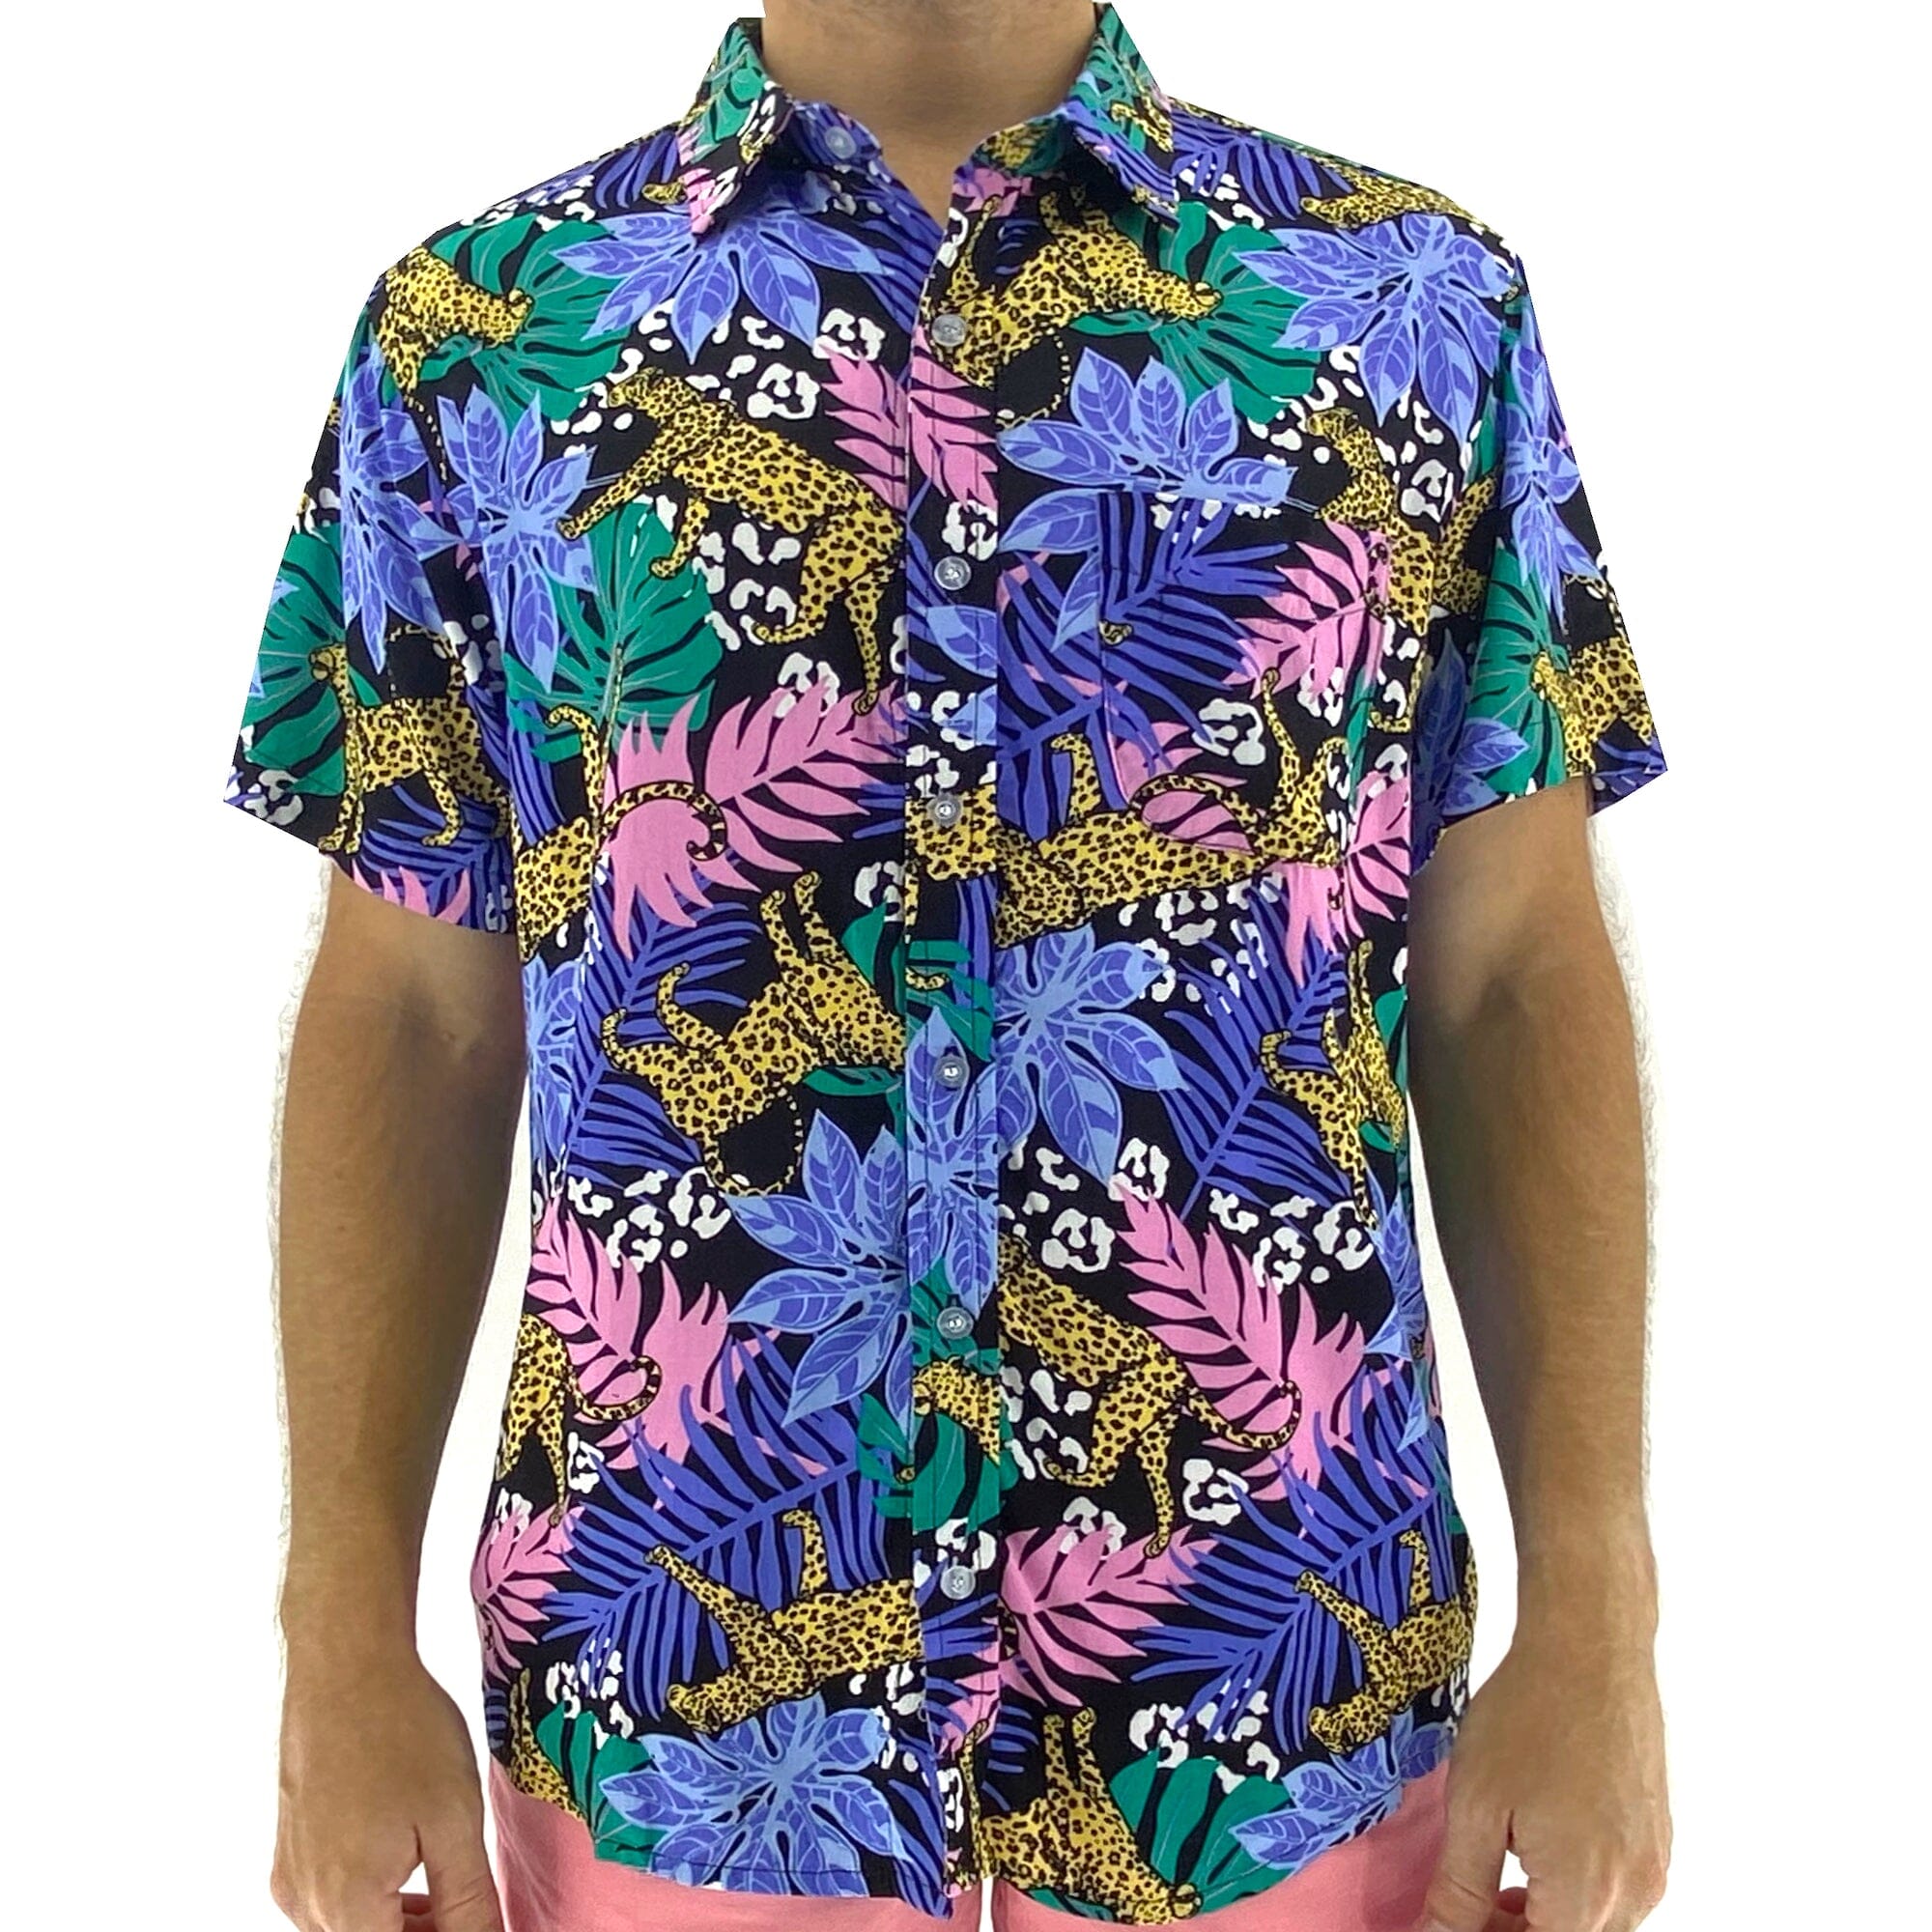 Men's Colorful Cheetah Patterned Soft Lightweight Button Down Shirt